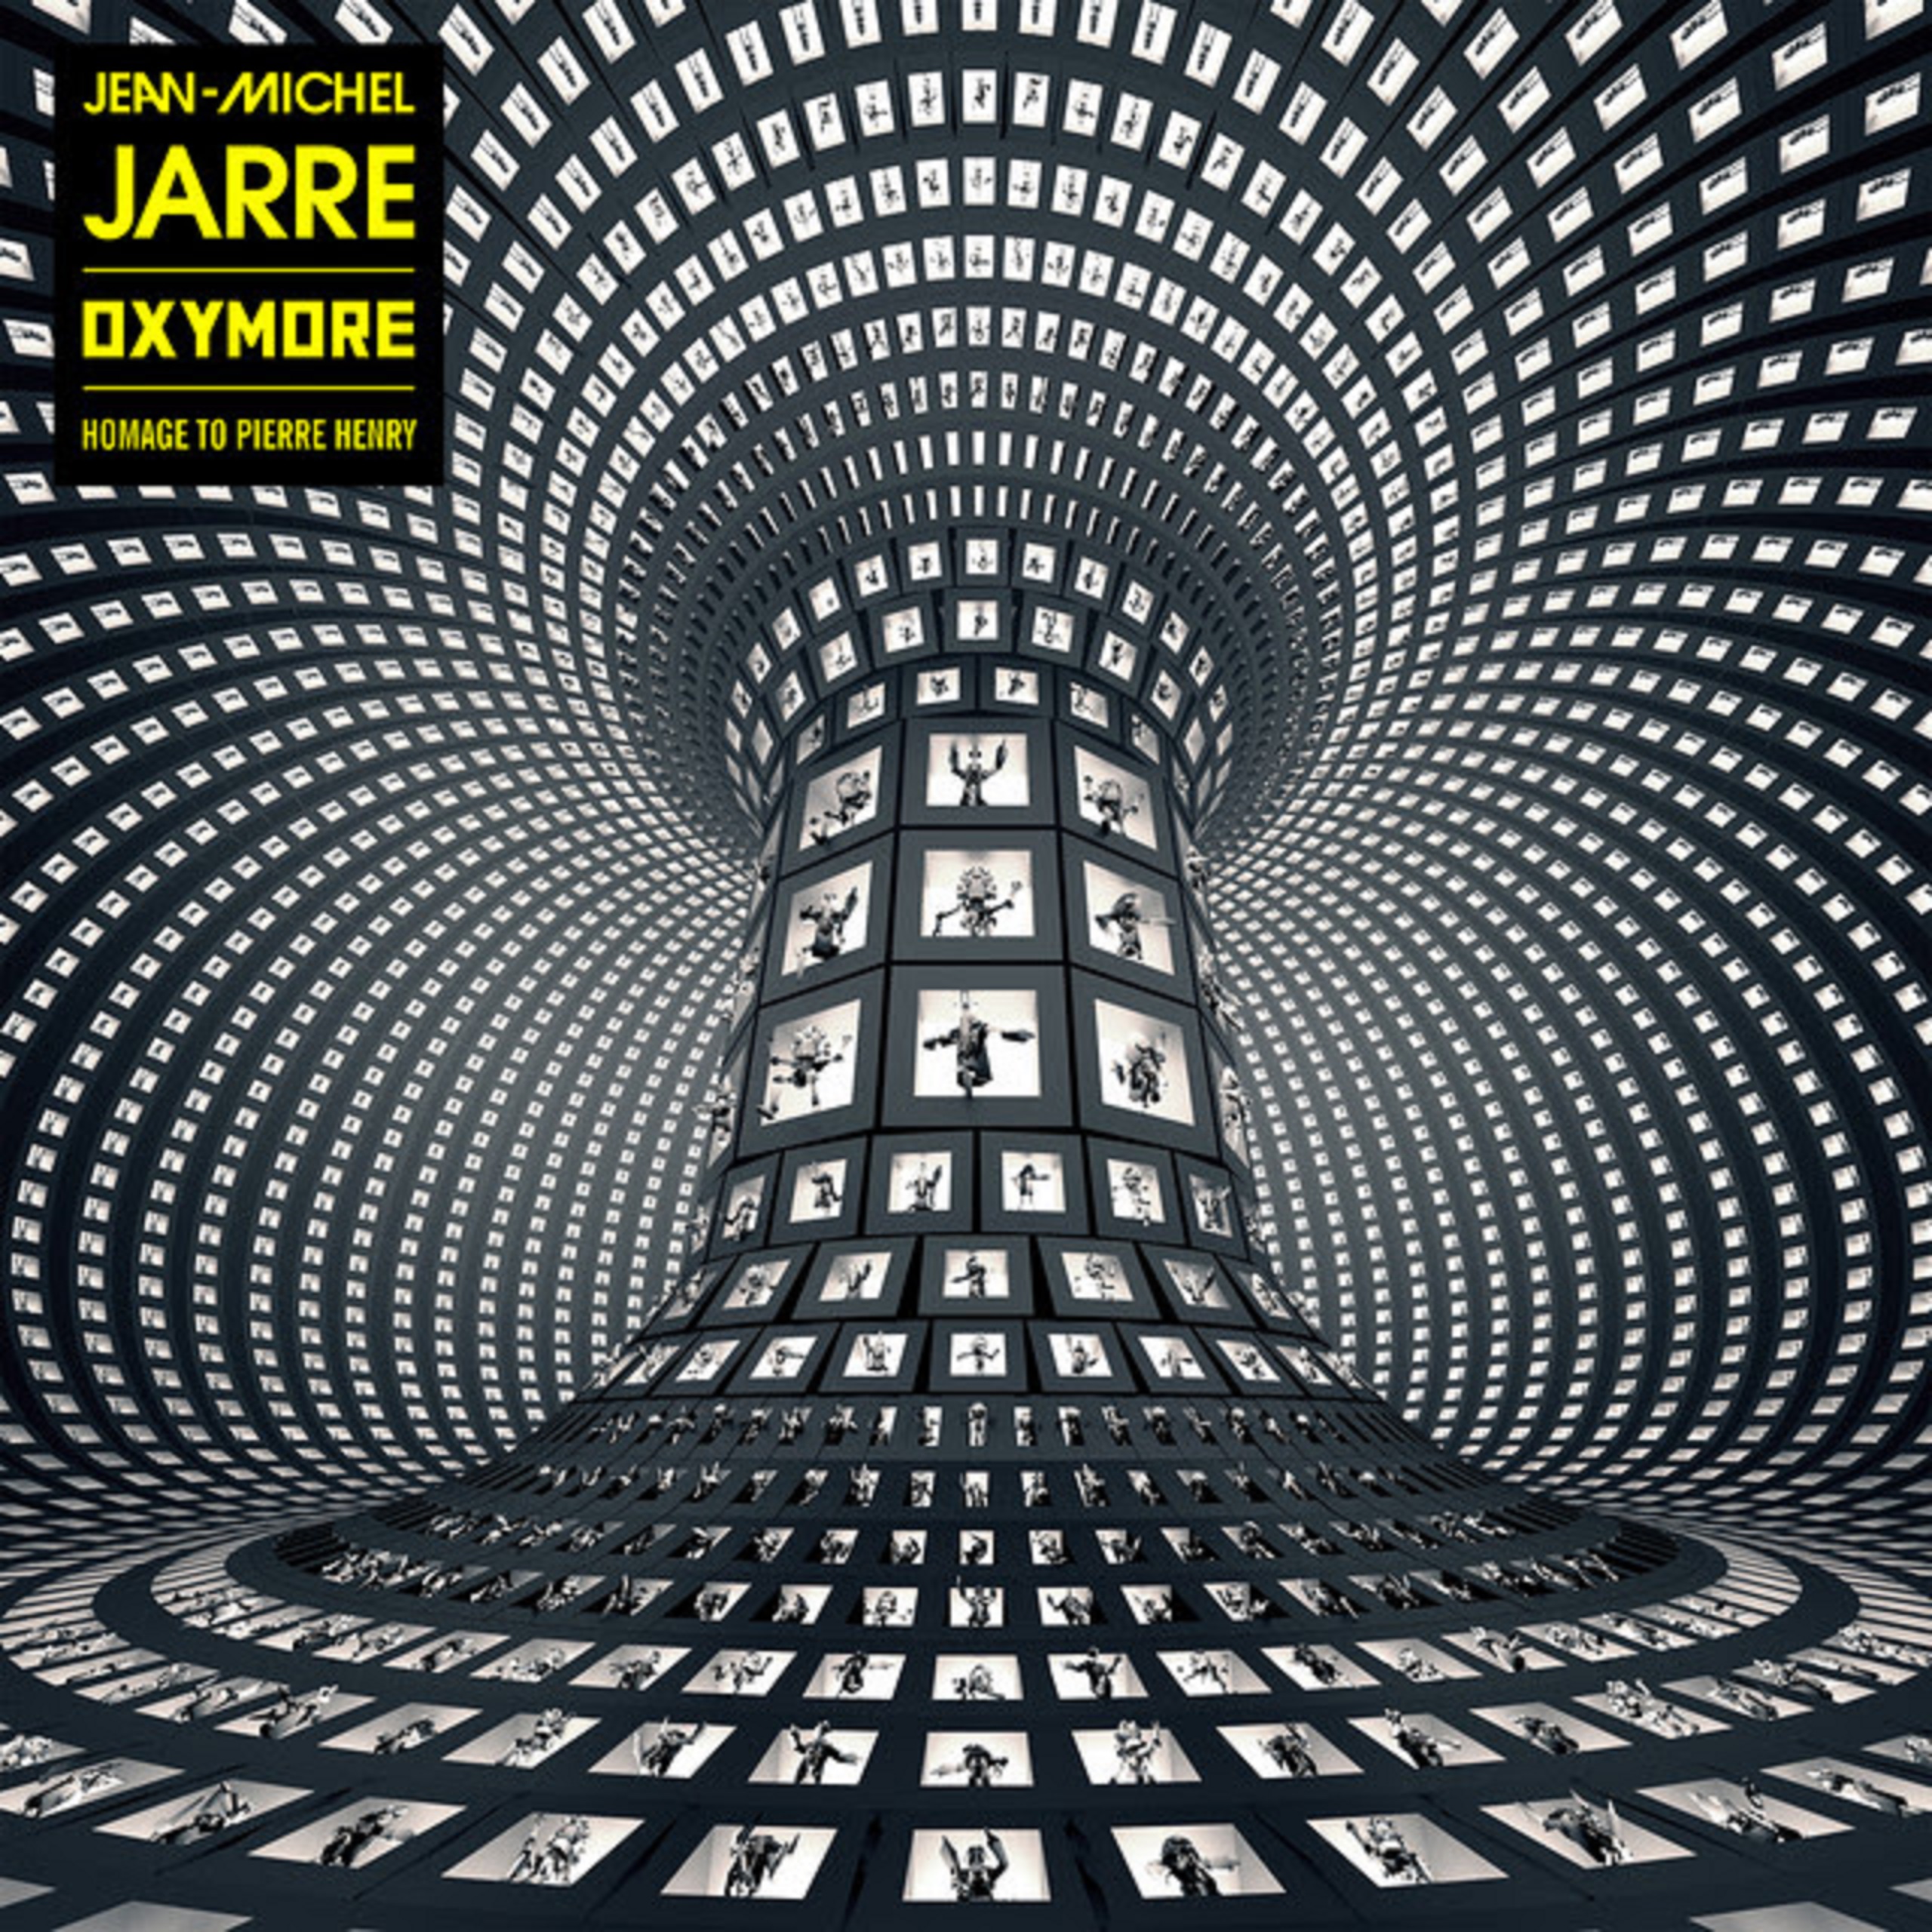 Jean-Michel Jarre Releases His 22nd Studio Album 'OXYMORE'